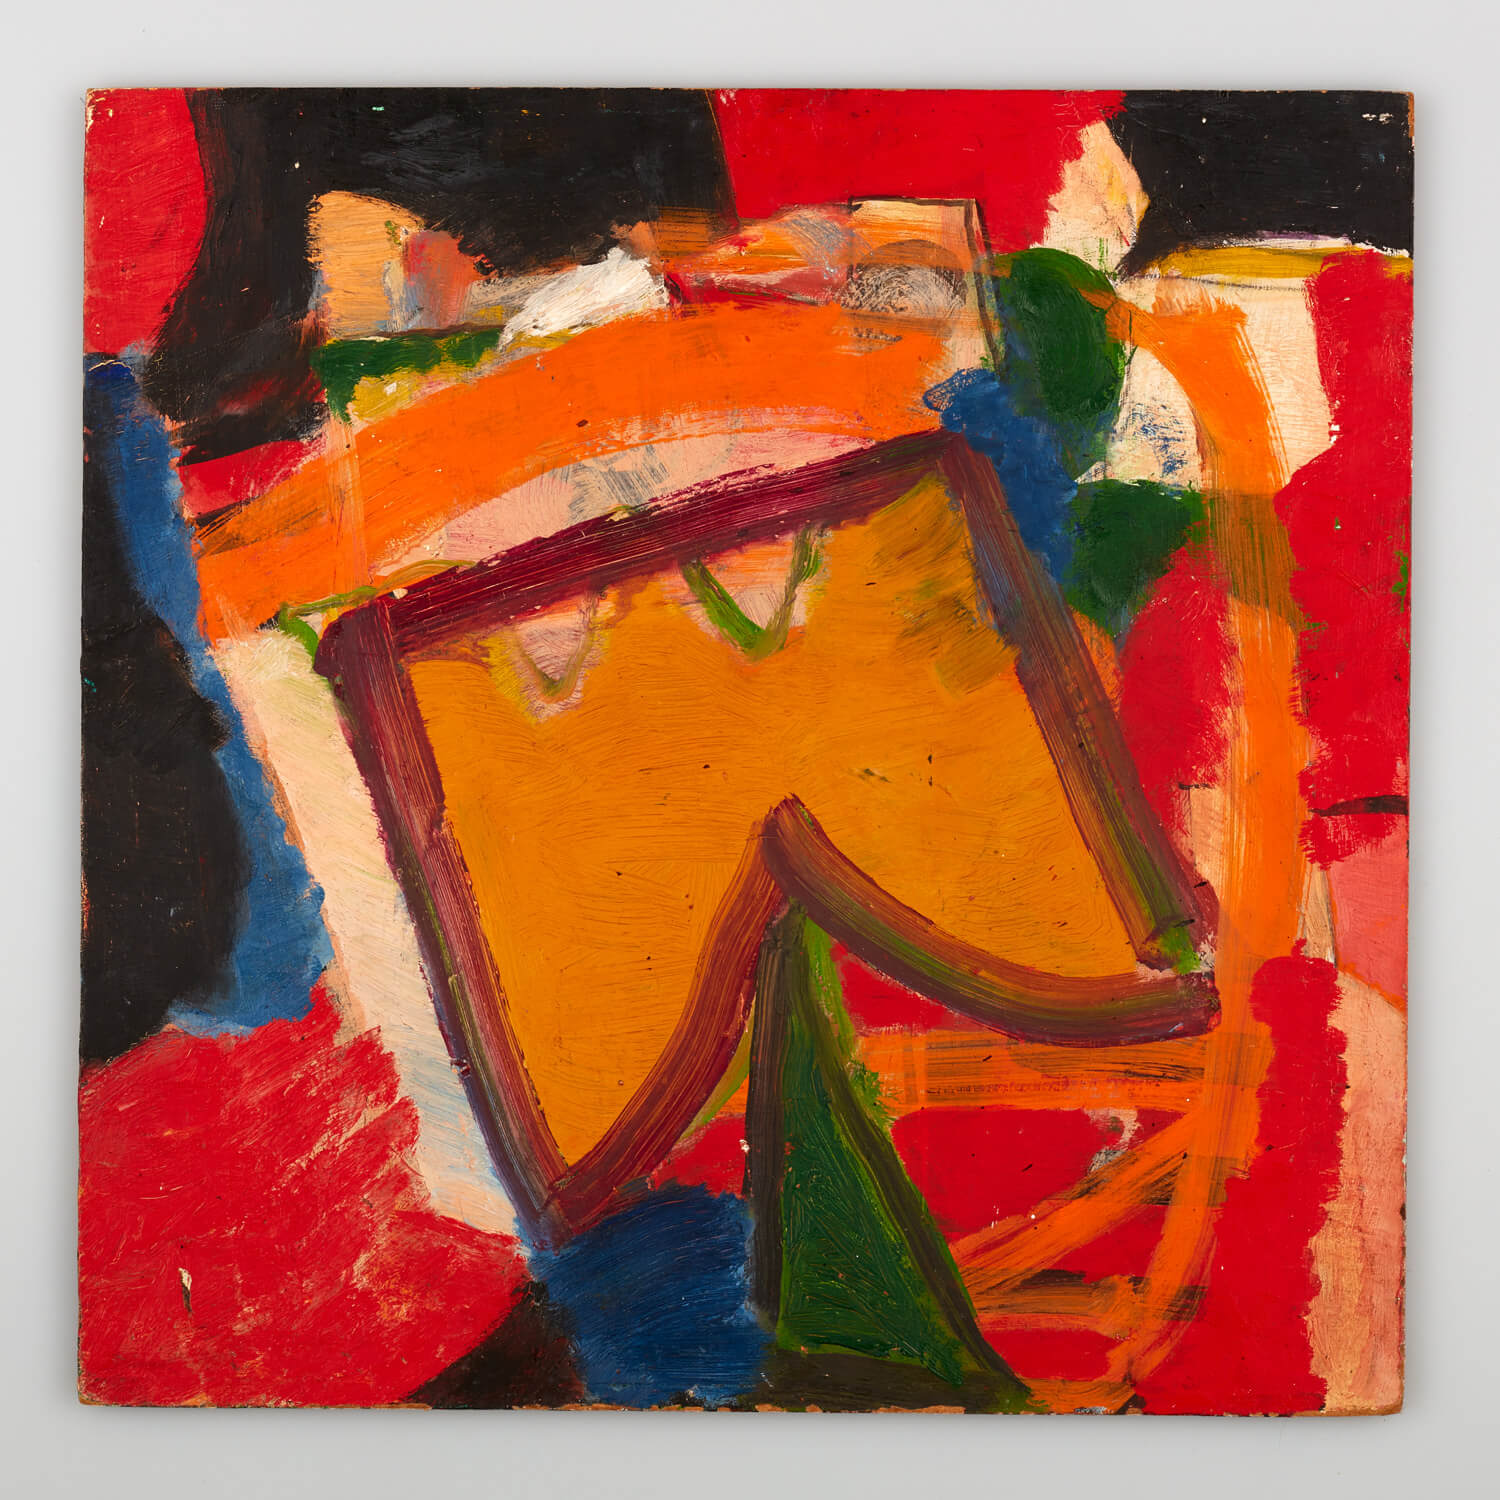 JB197 - Abstract - 1985 - 40 x 40 cm - Oil on panel